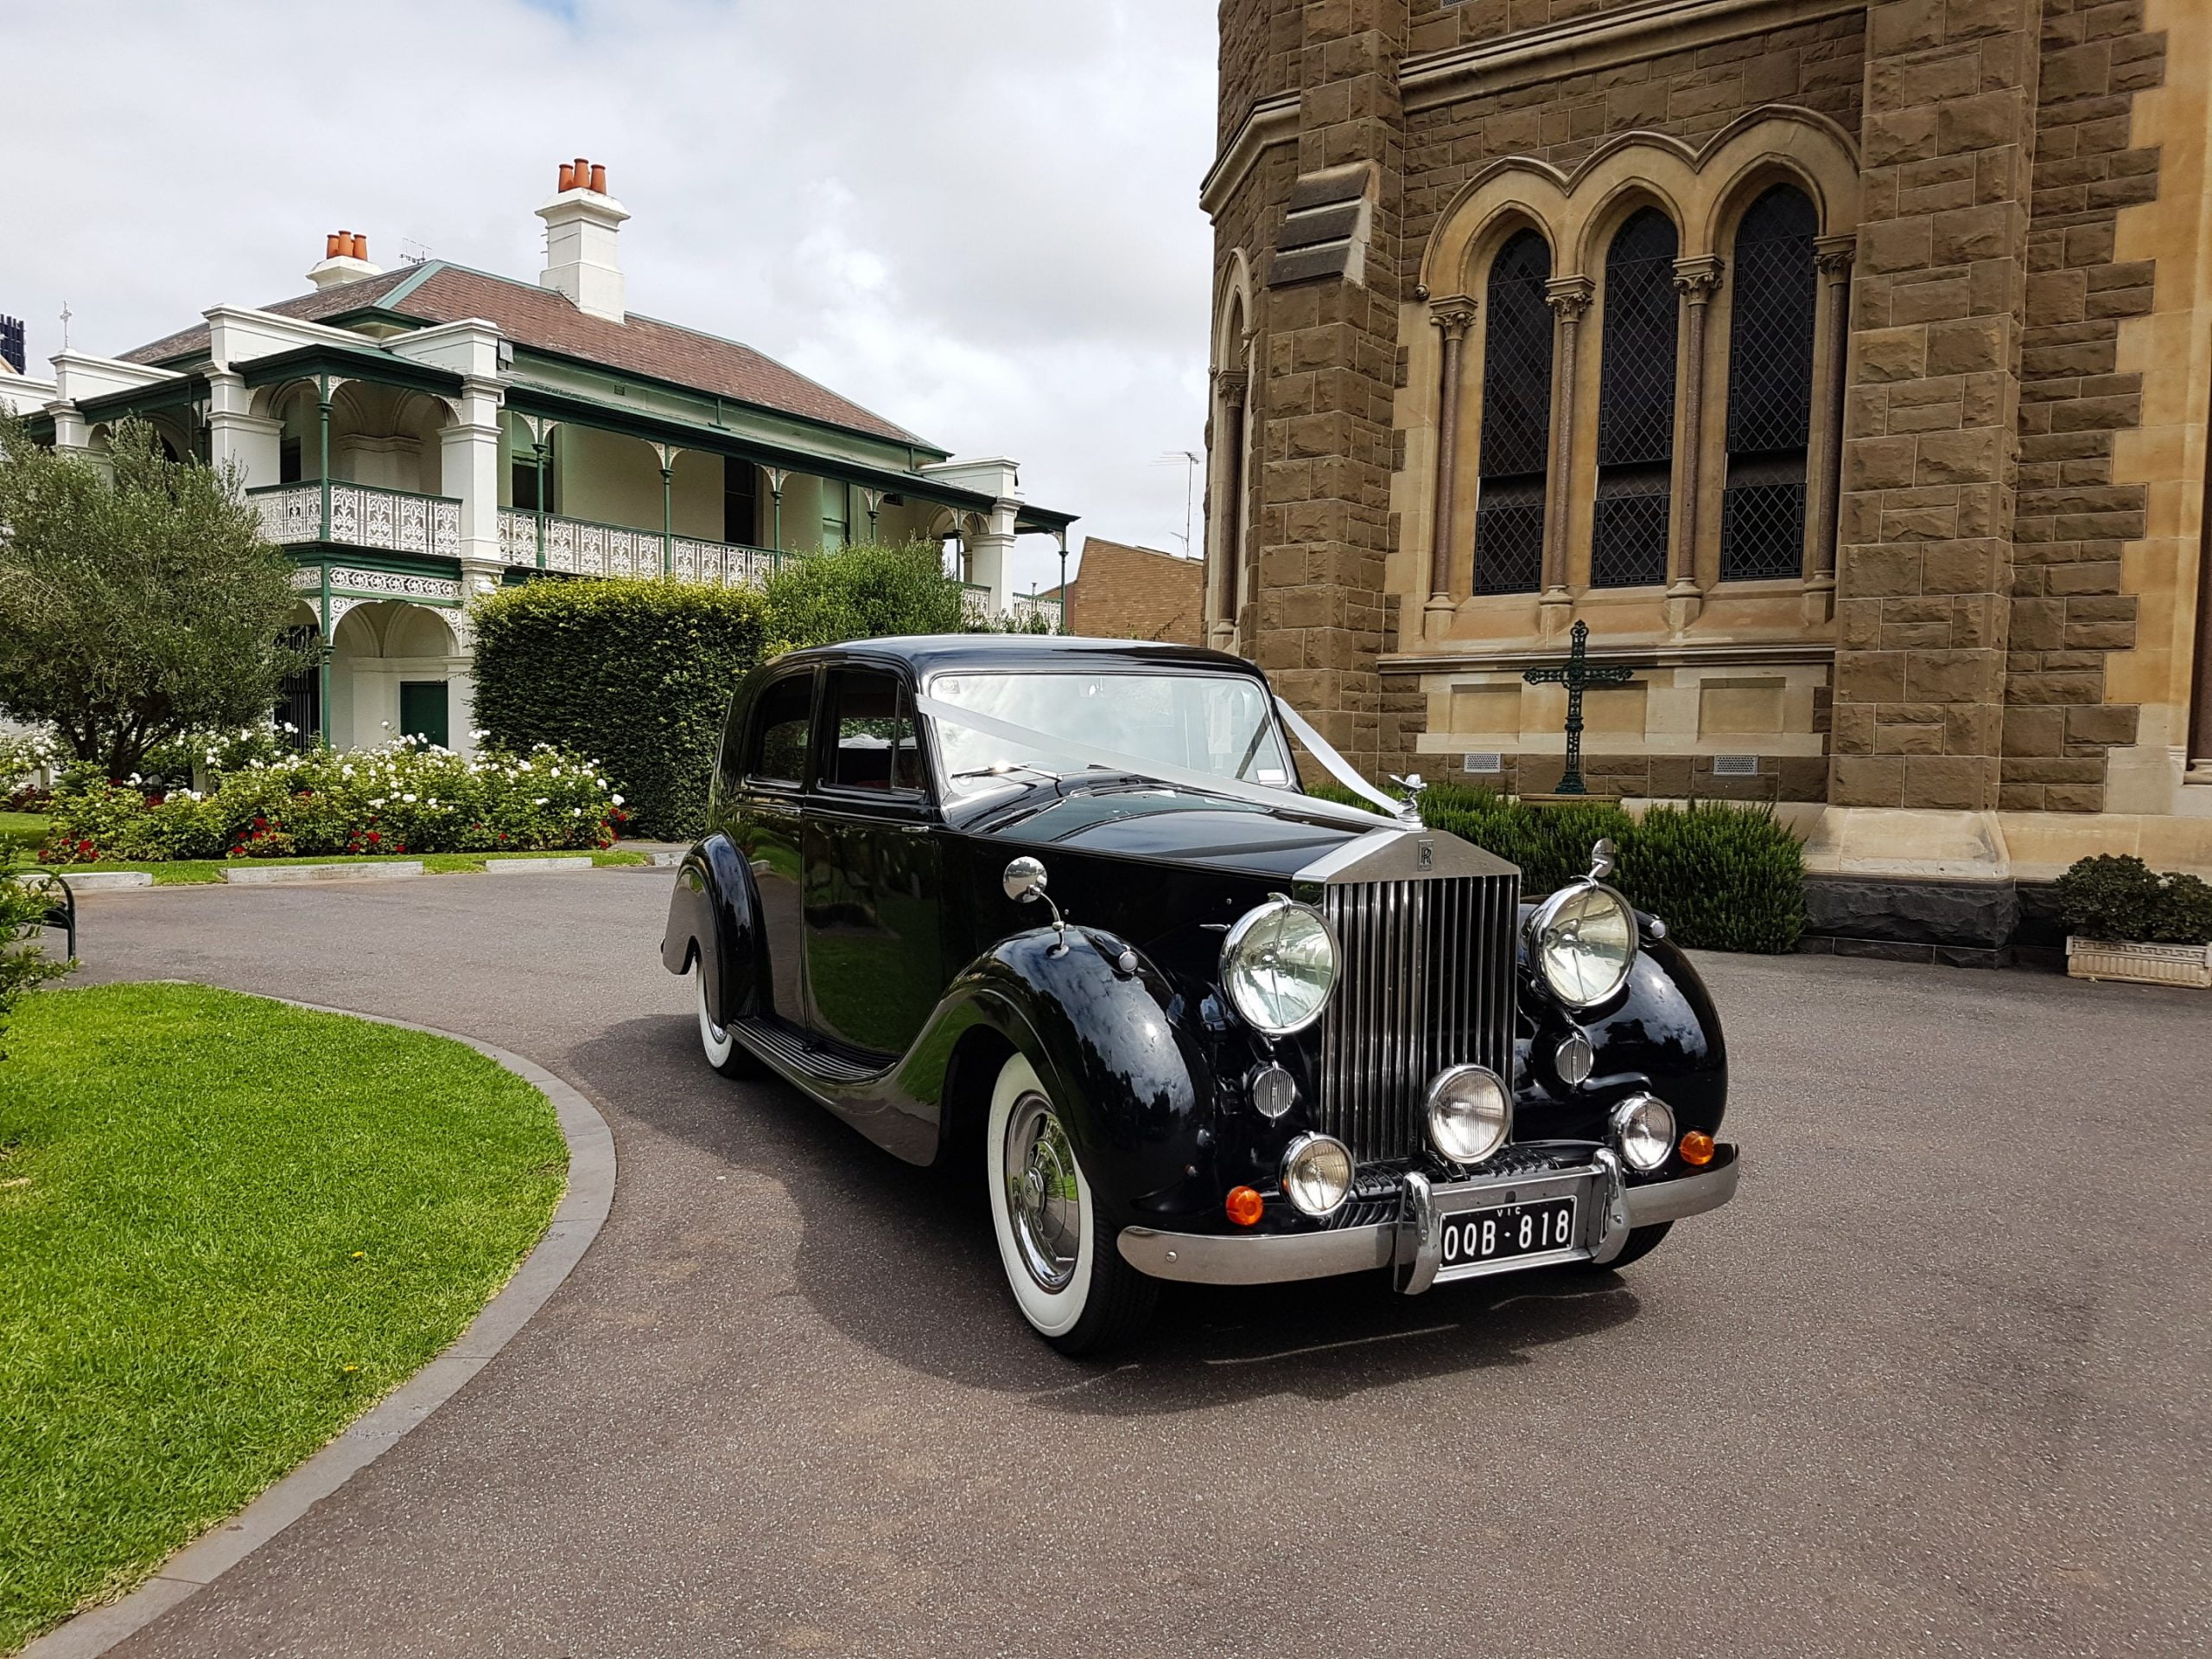 1947 Rolls Royce Wraith Renee and Nicholas's wedding 7 March 2020